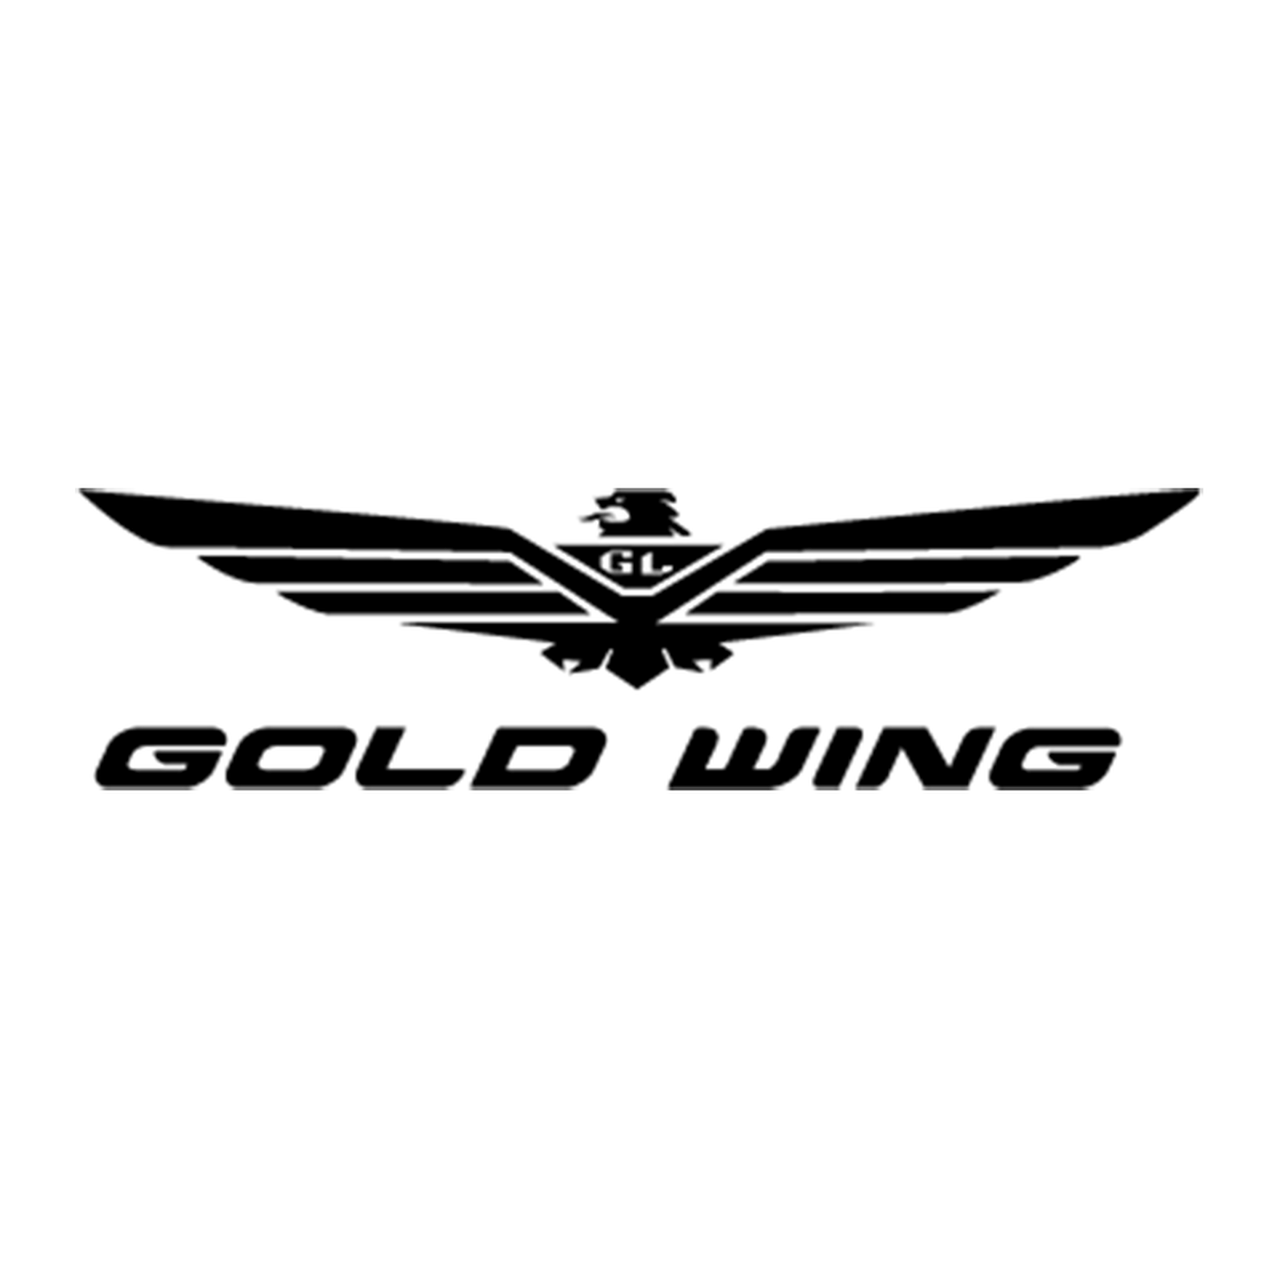 Goldwing emblem self-adhesive, width 16cm - Goldwing.nl - EN